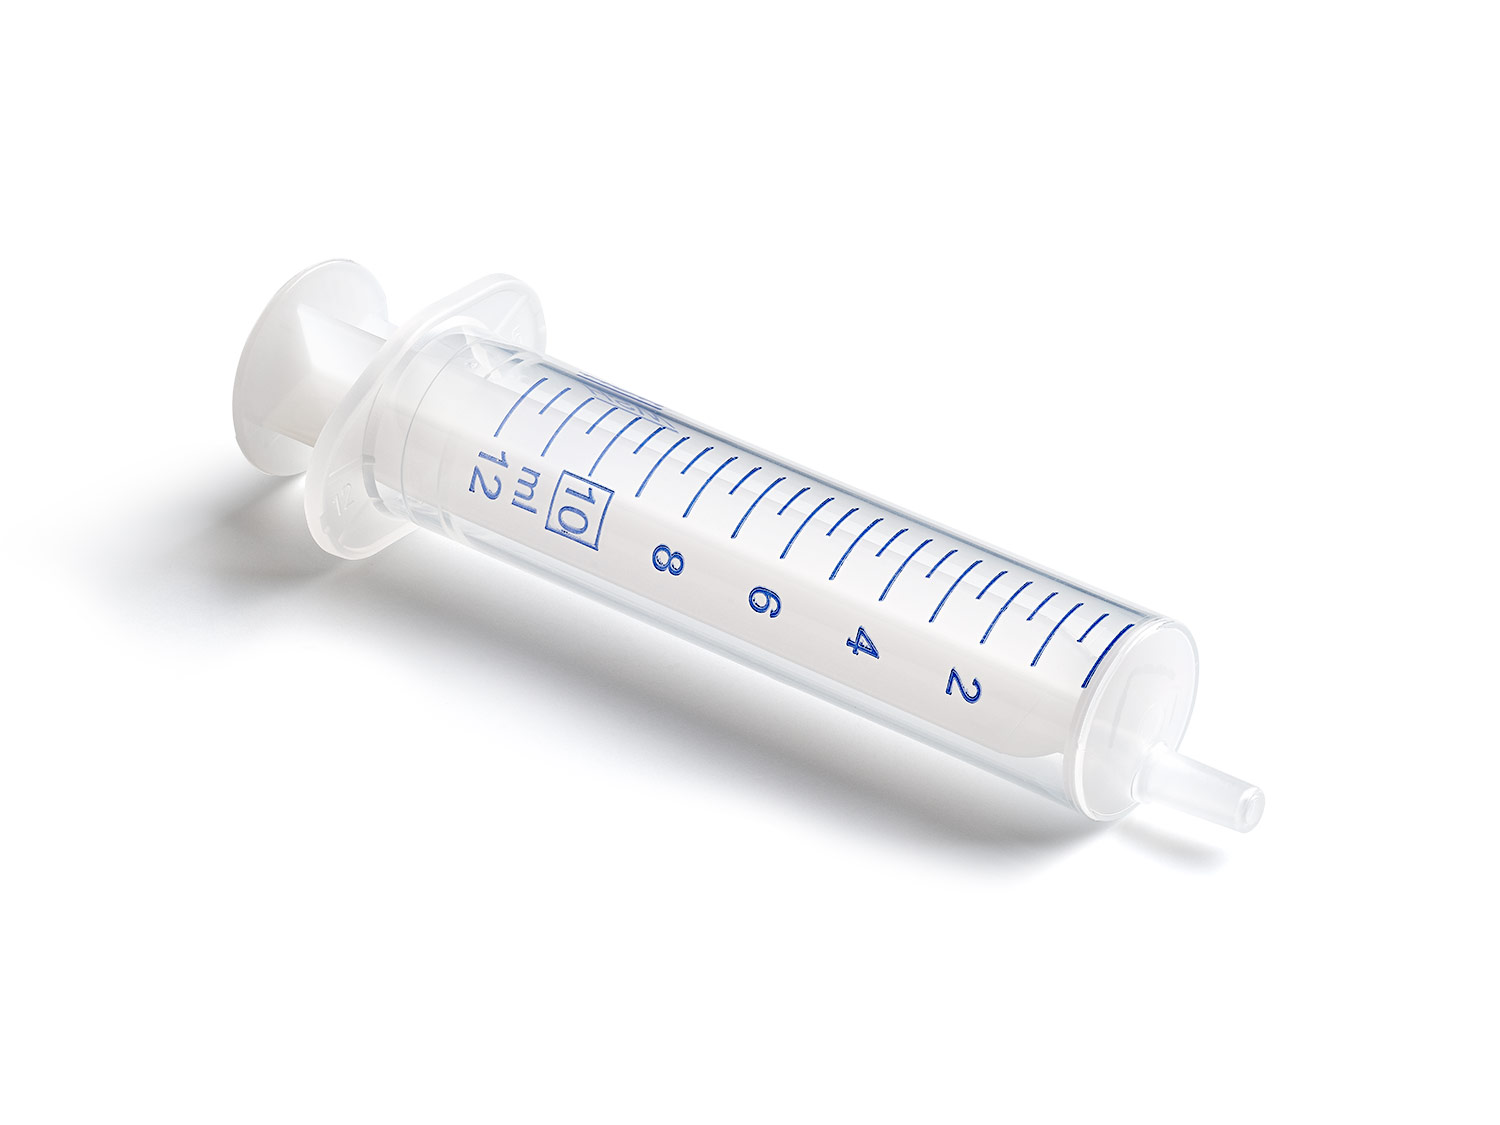 10 mL Disposable Syringe